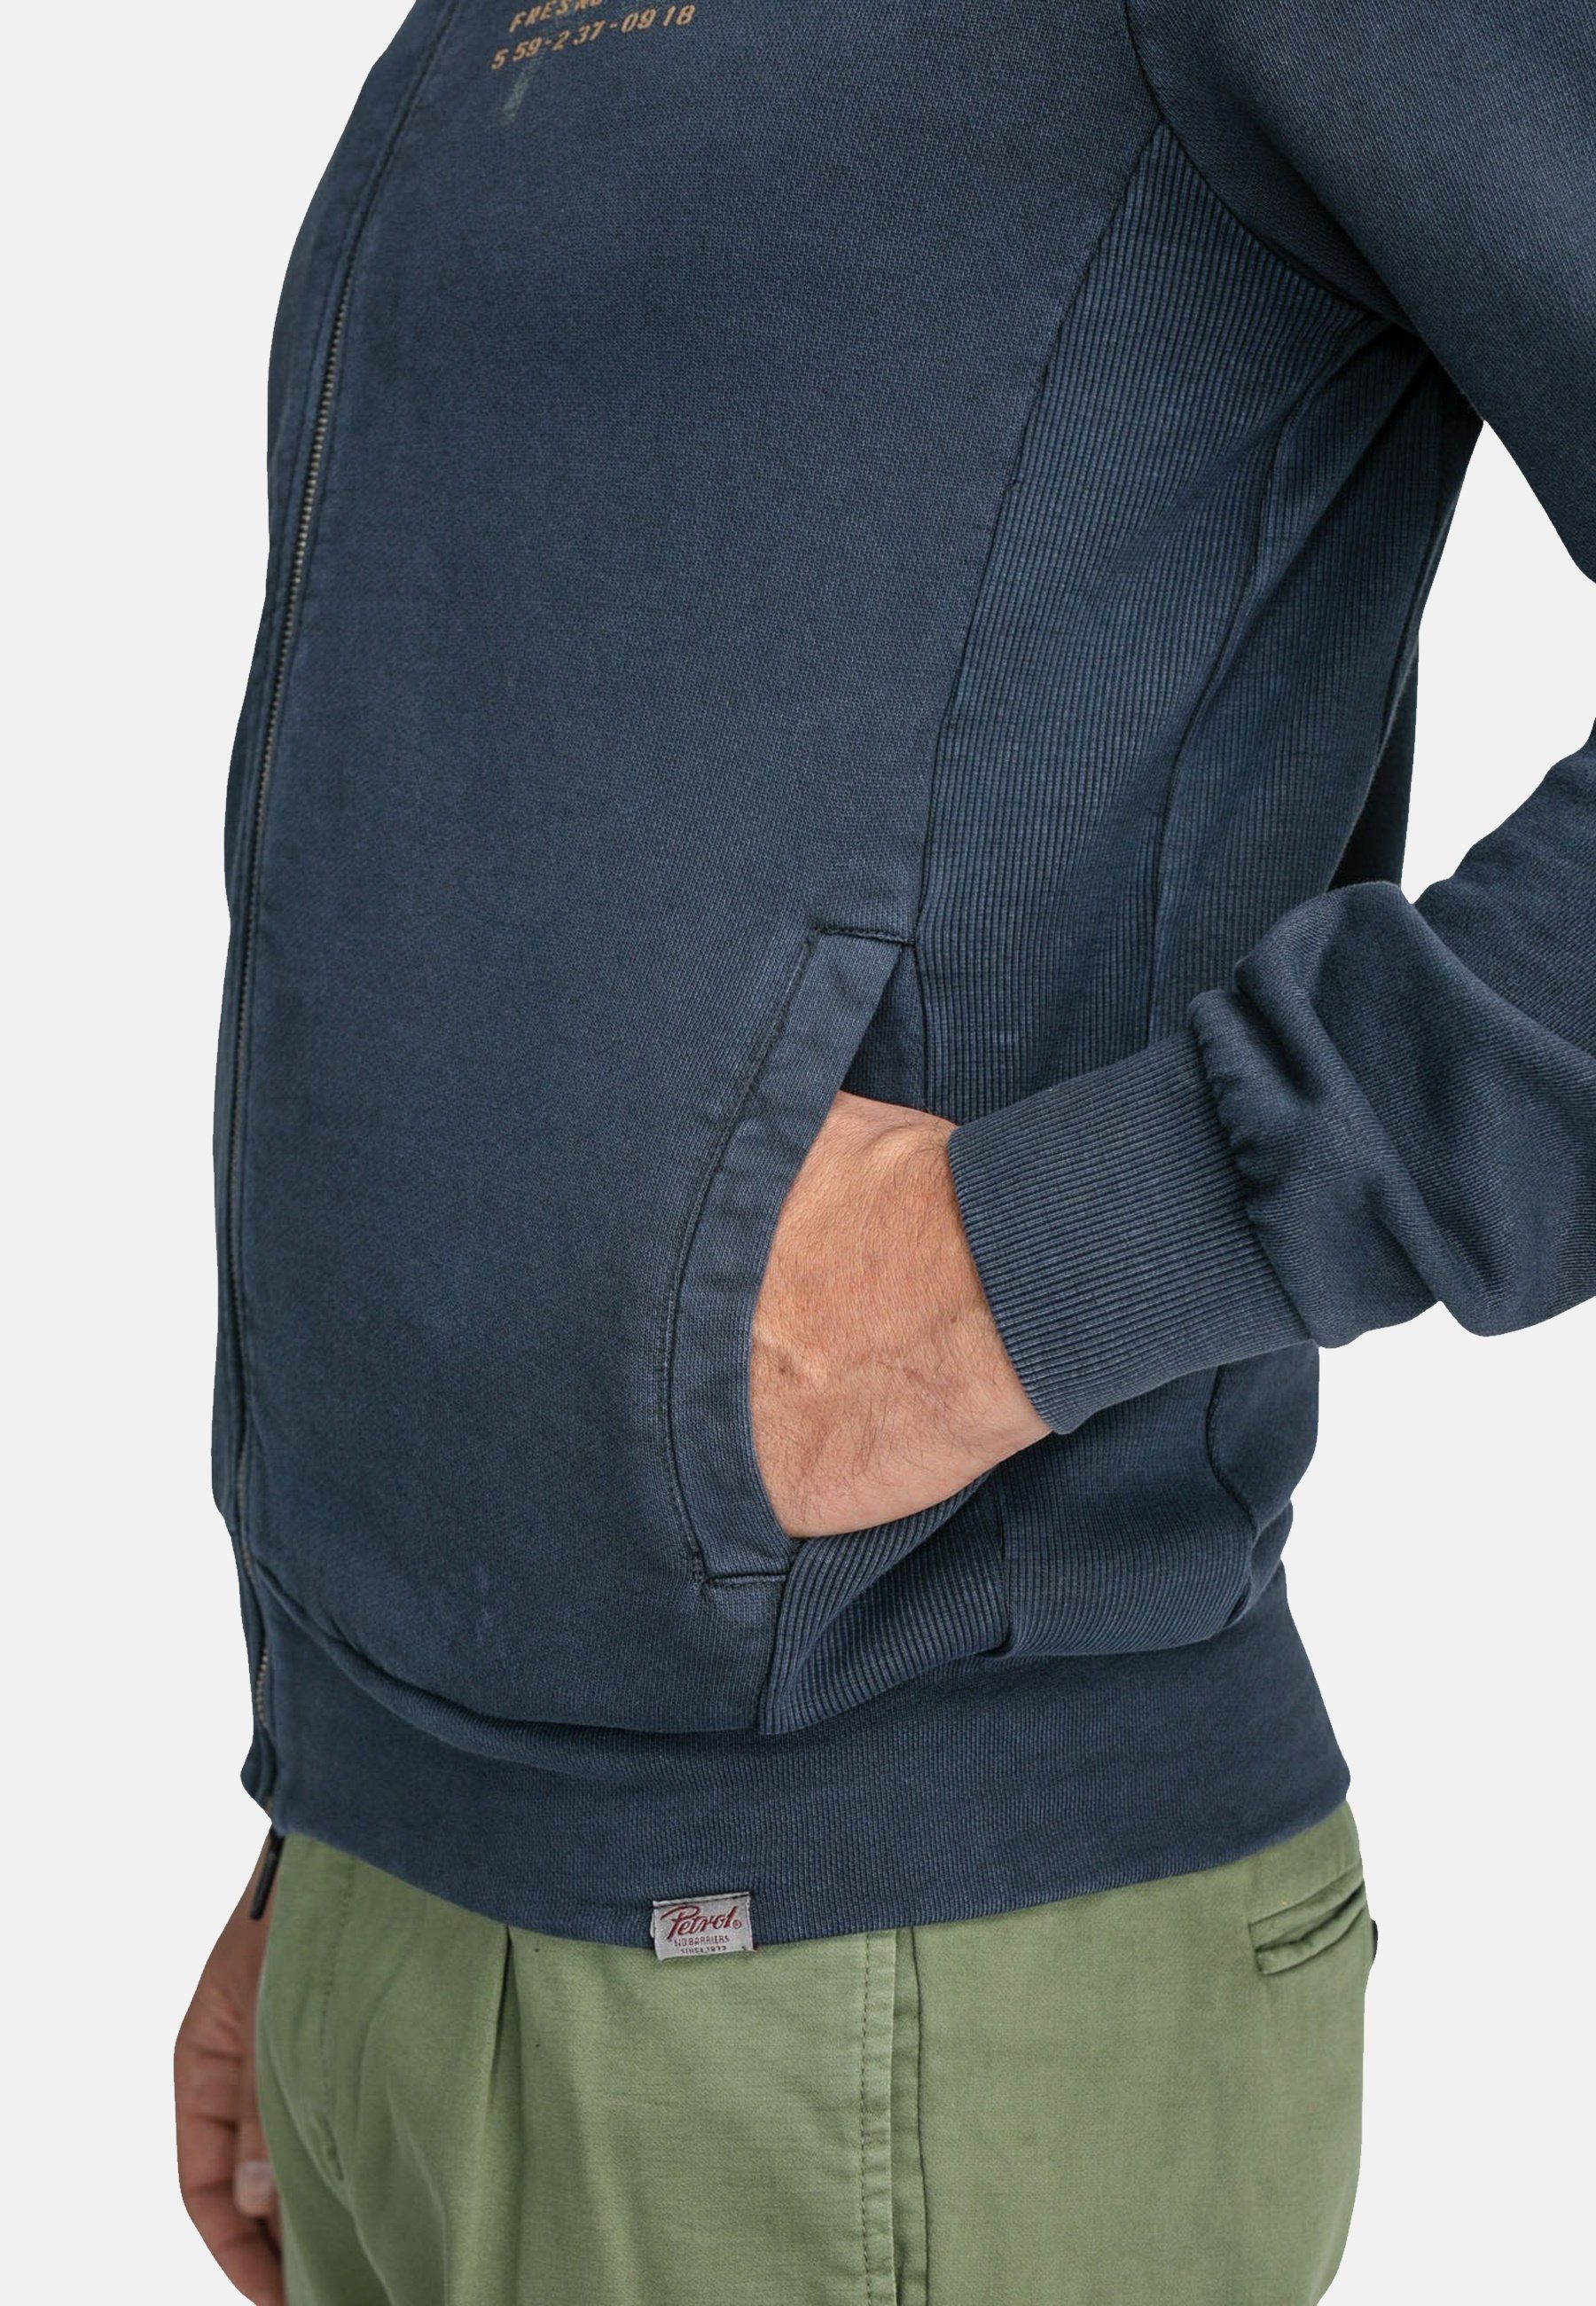 Sweater Petrol Jacke Industries Collar mit Reißverschluss Sweatjacke dunkelblau Sweatjacke